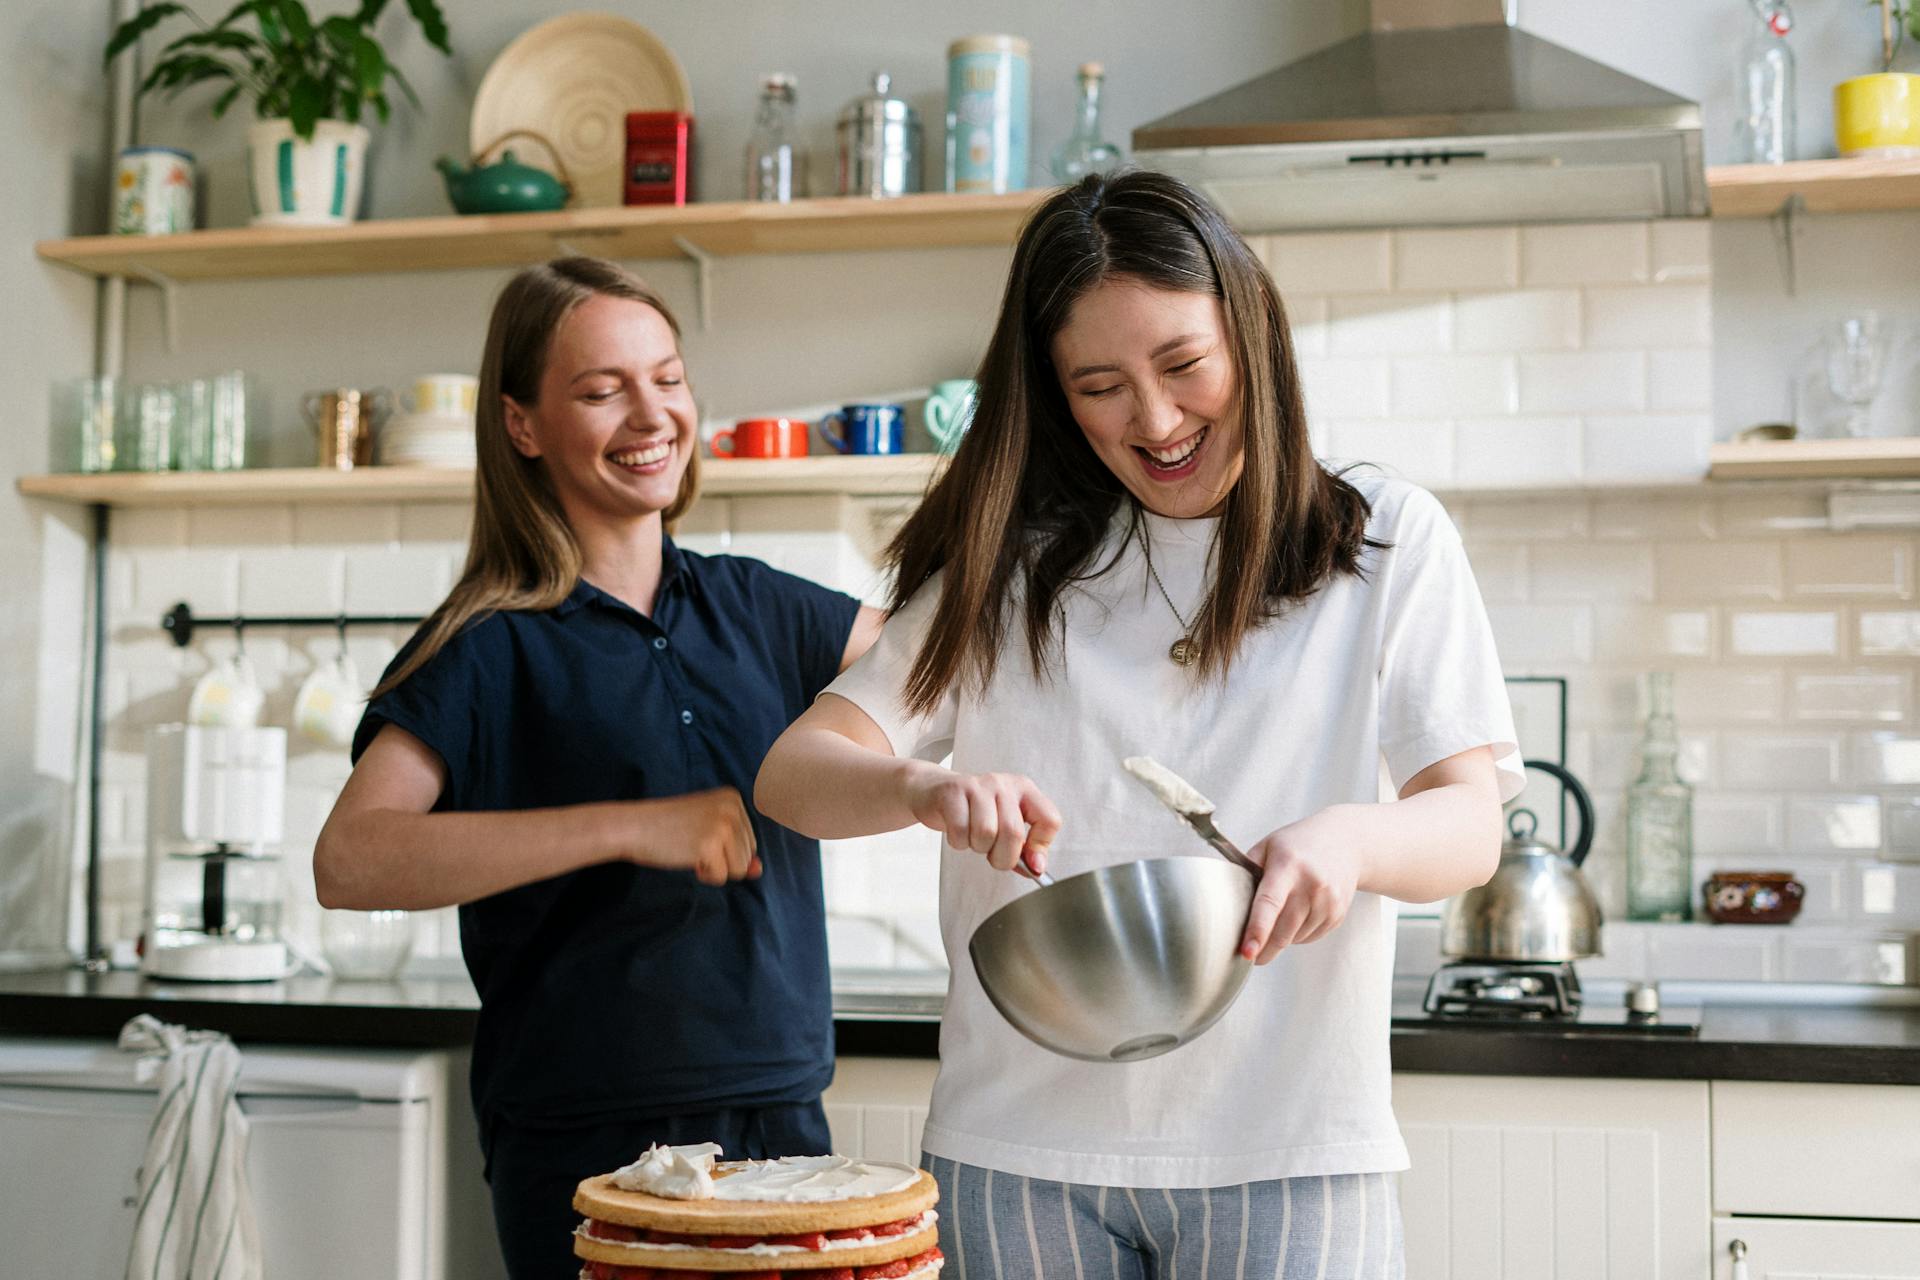 Two women preparing pancakes in the kitchen | Source: Pexels